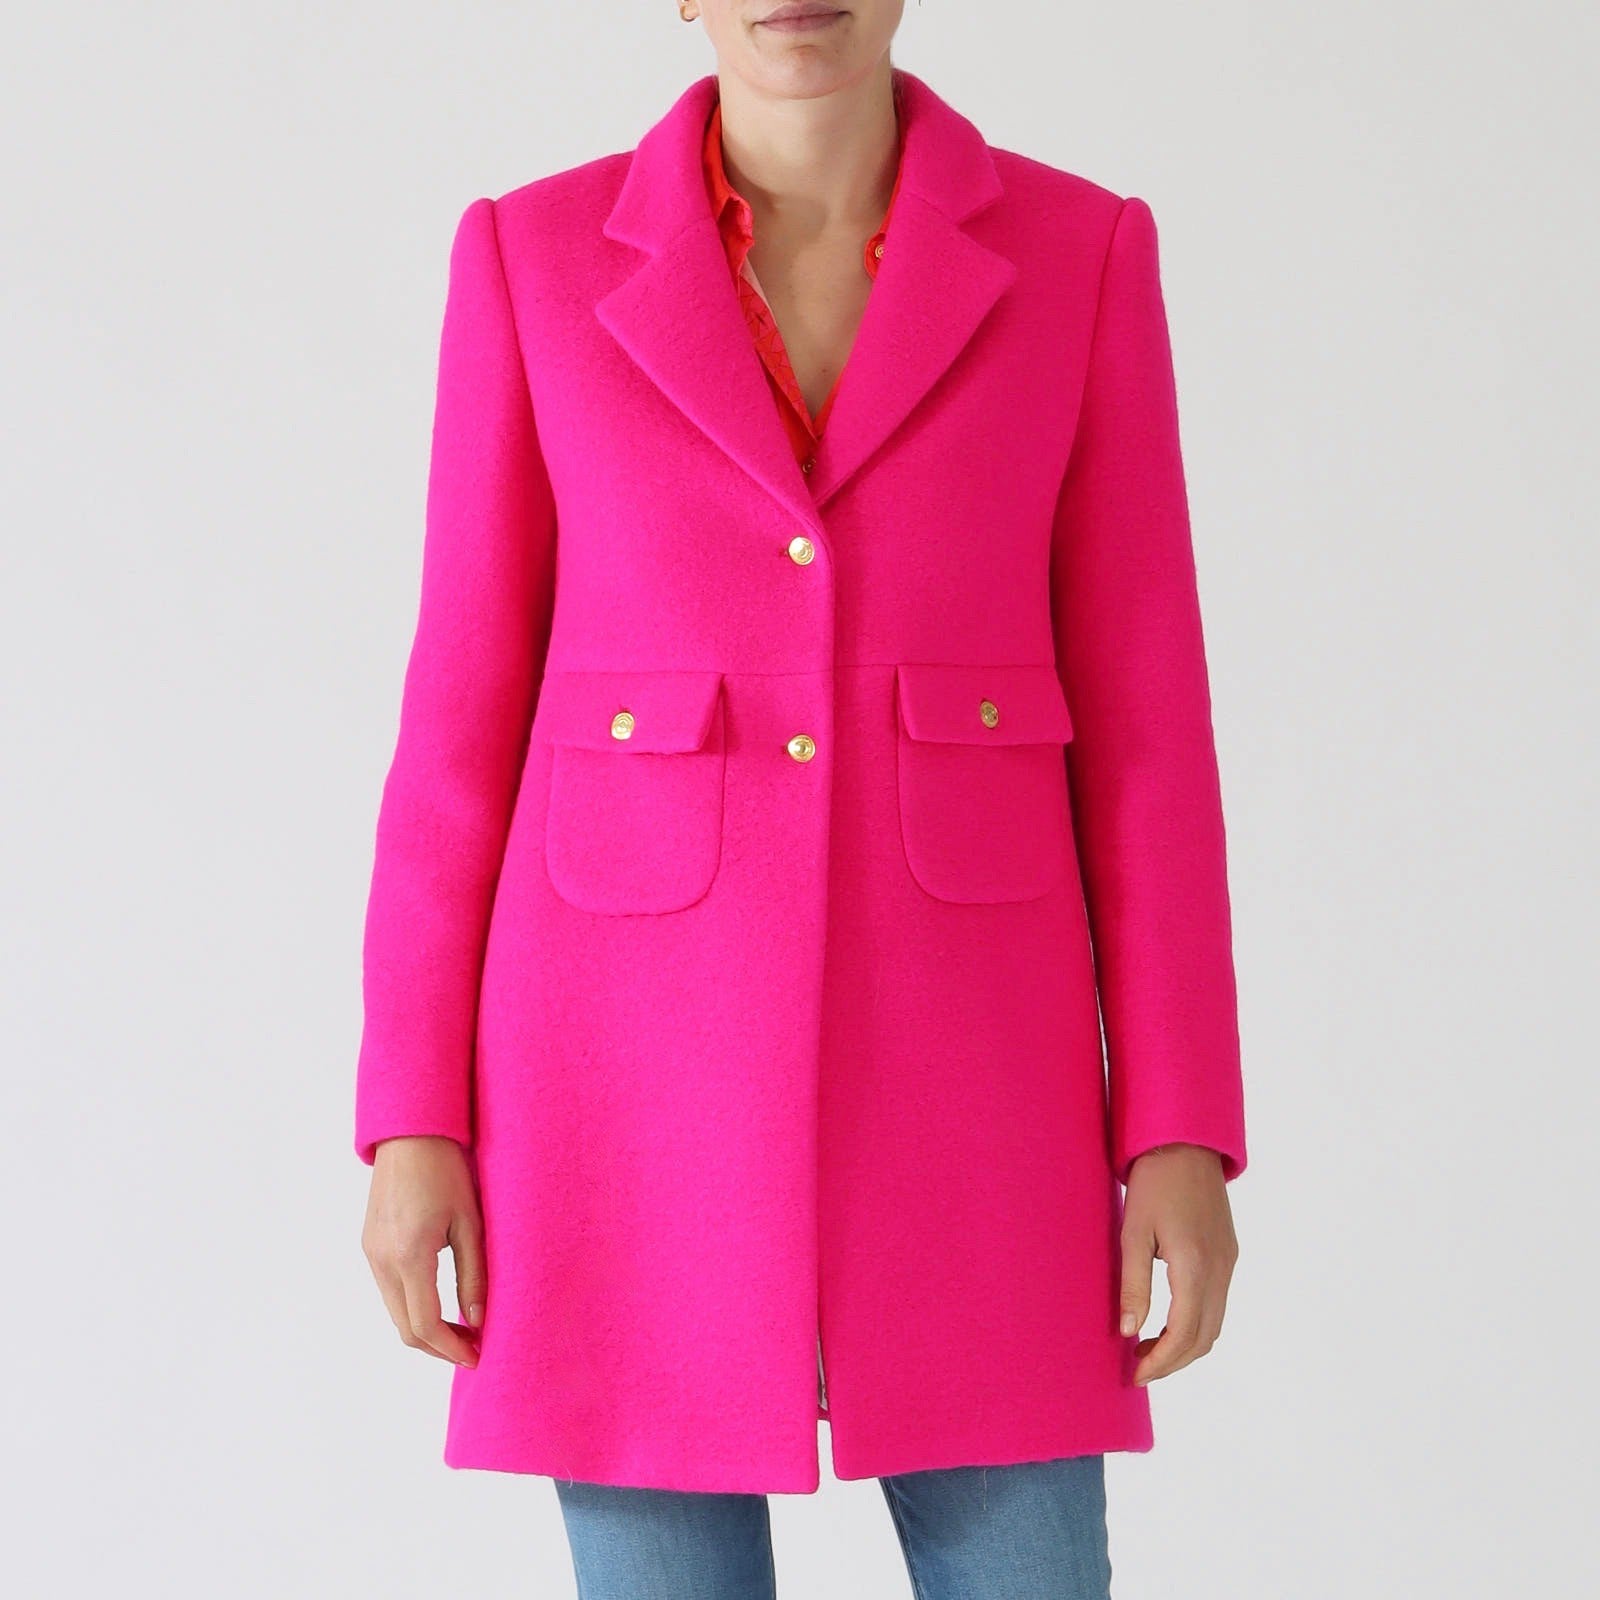 Lucia Pink Neon Wool Blend Coat